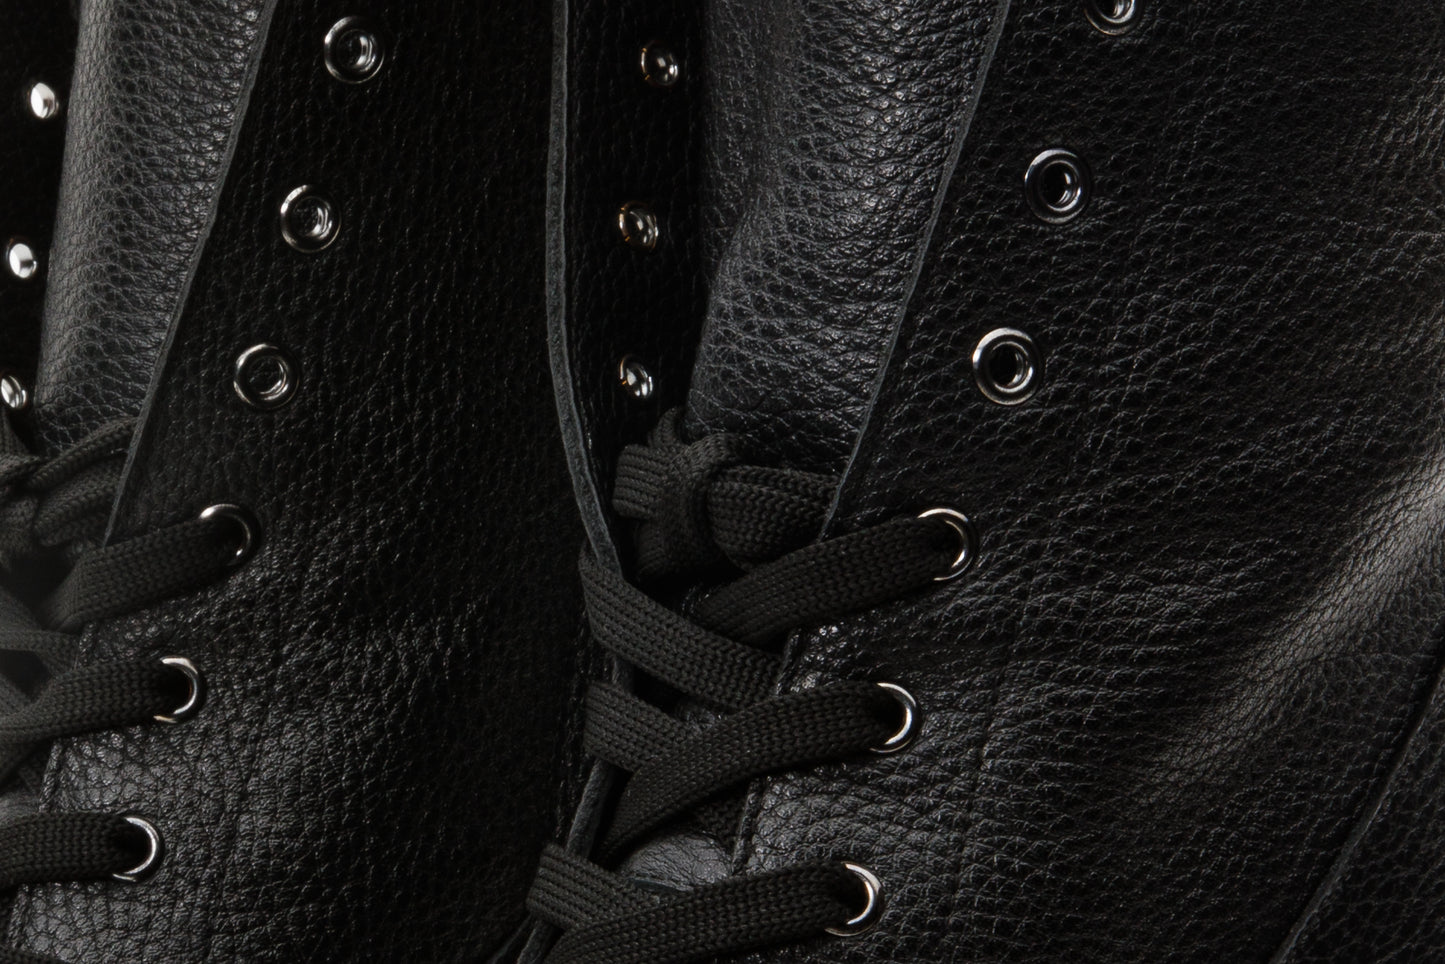 The Melo Black Leather Natural Fur Mid Calf Platform Heel Women Boot